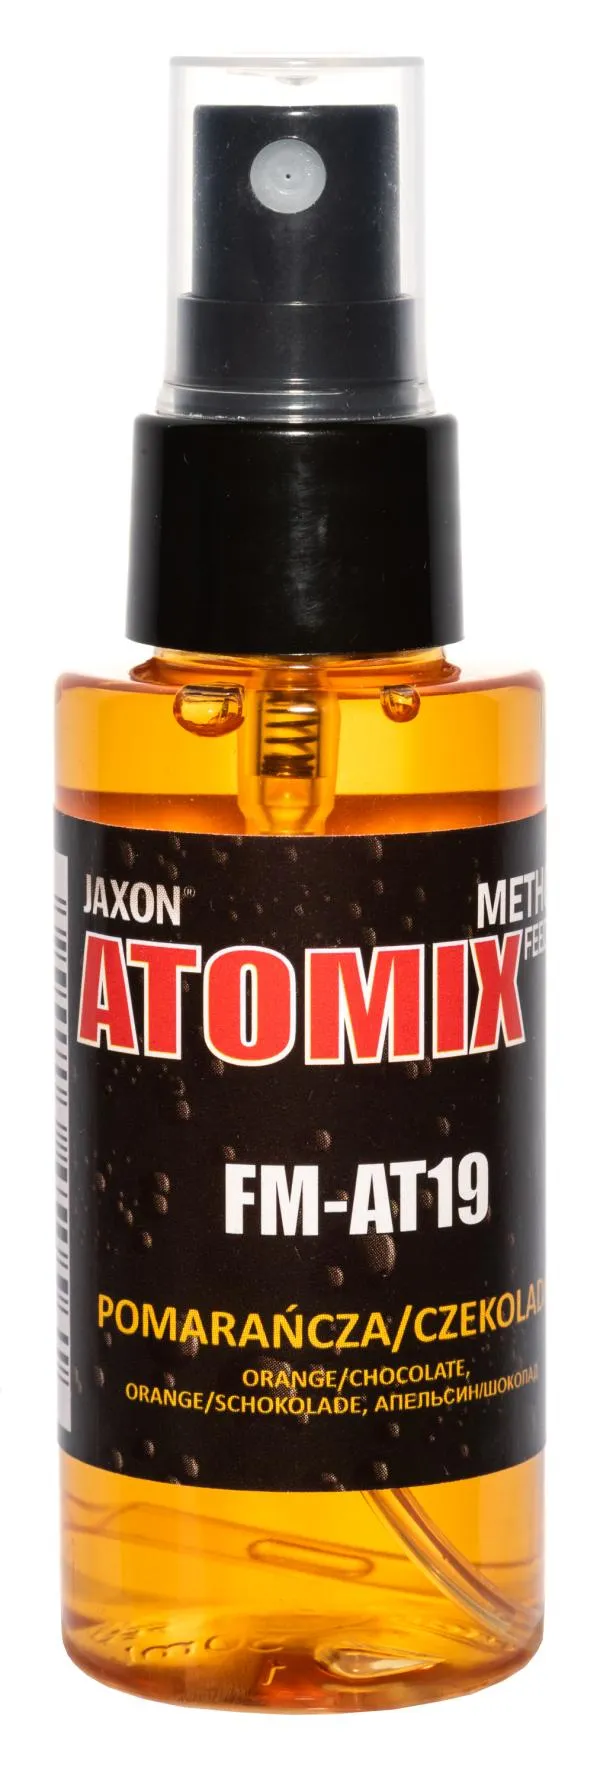 JAXON ATOMIX - CSOKI/NARANCS 50g aroma